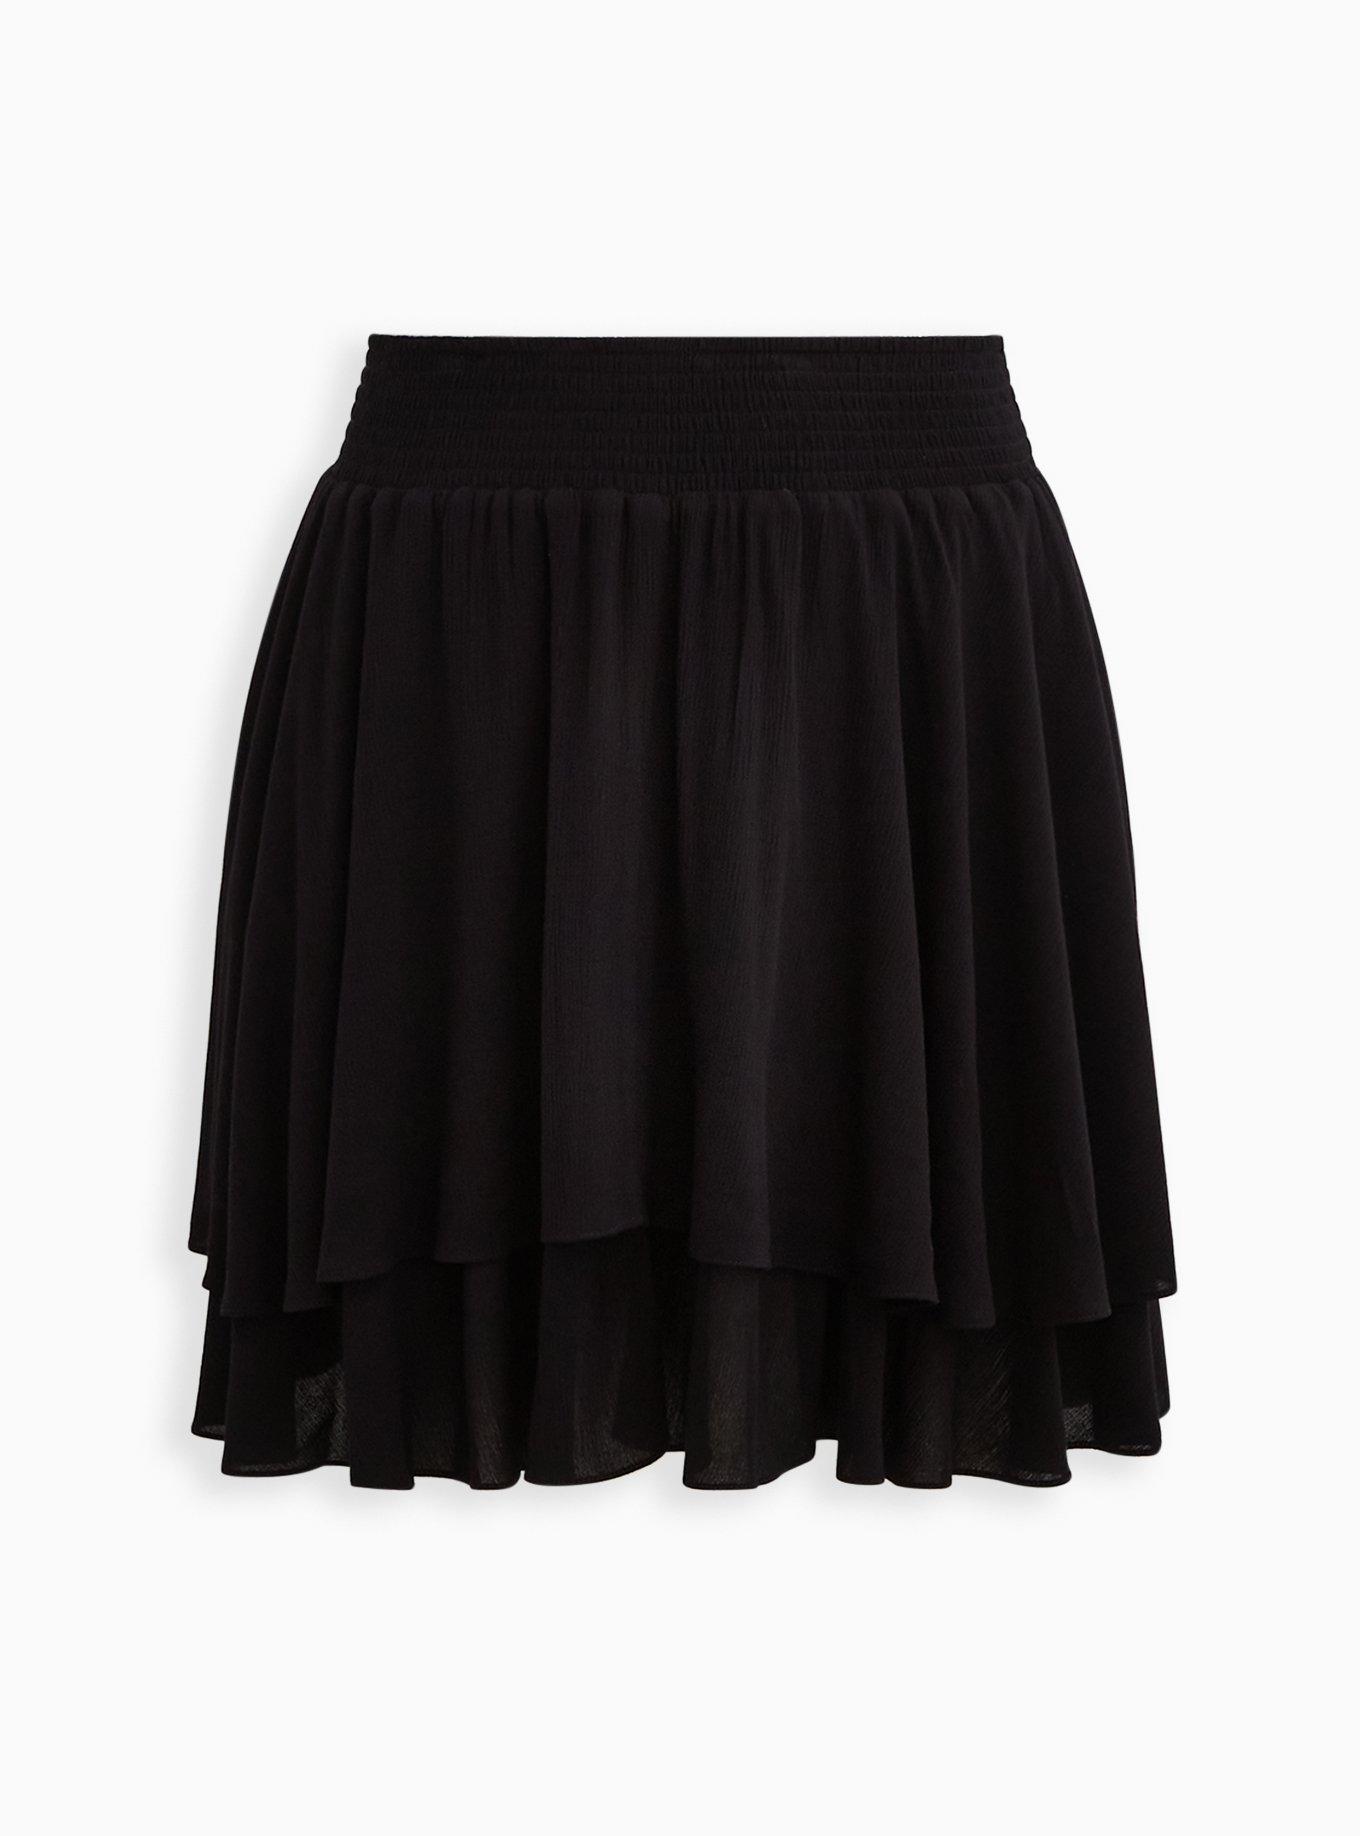 Plus Size - Tiered Mini Skirt - Crinkle Gauze Black - Torrid